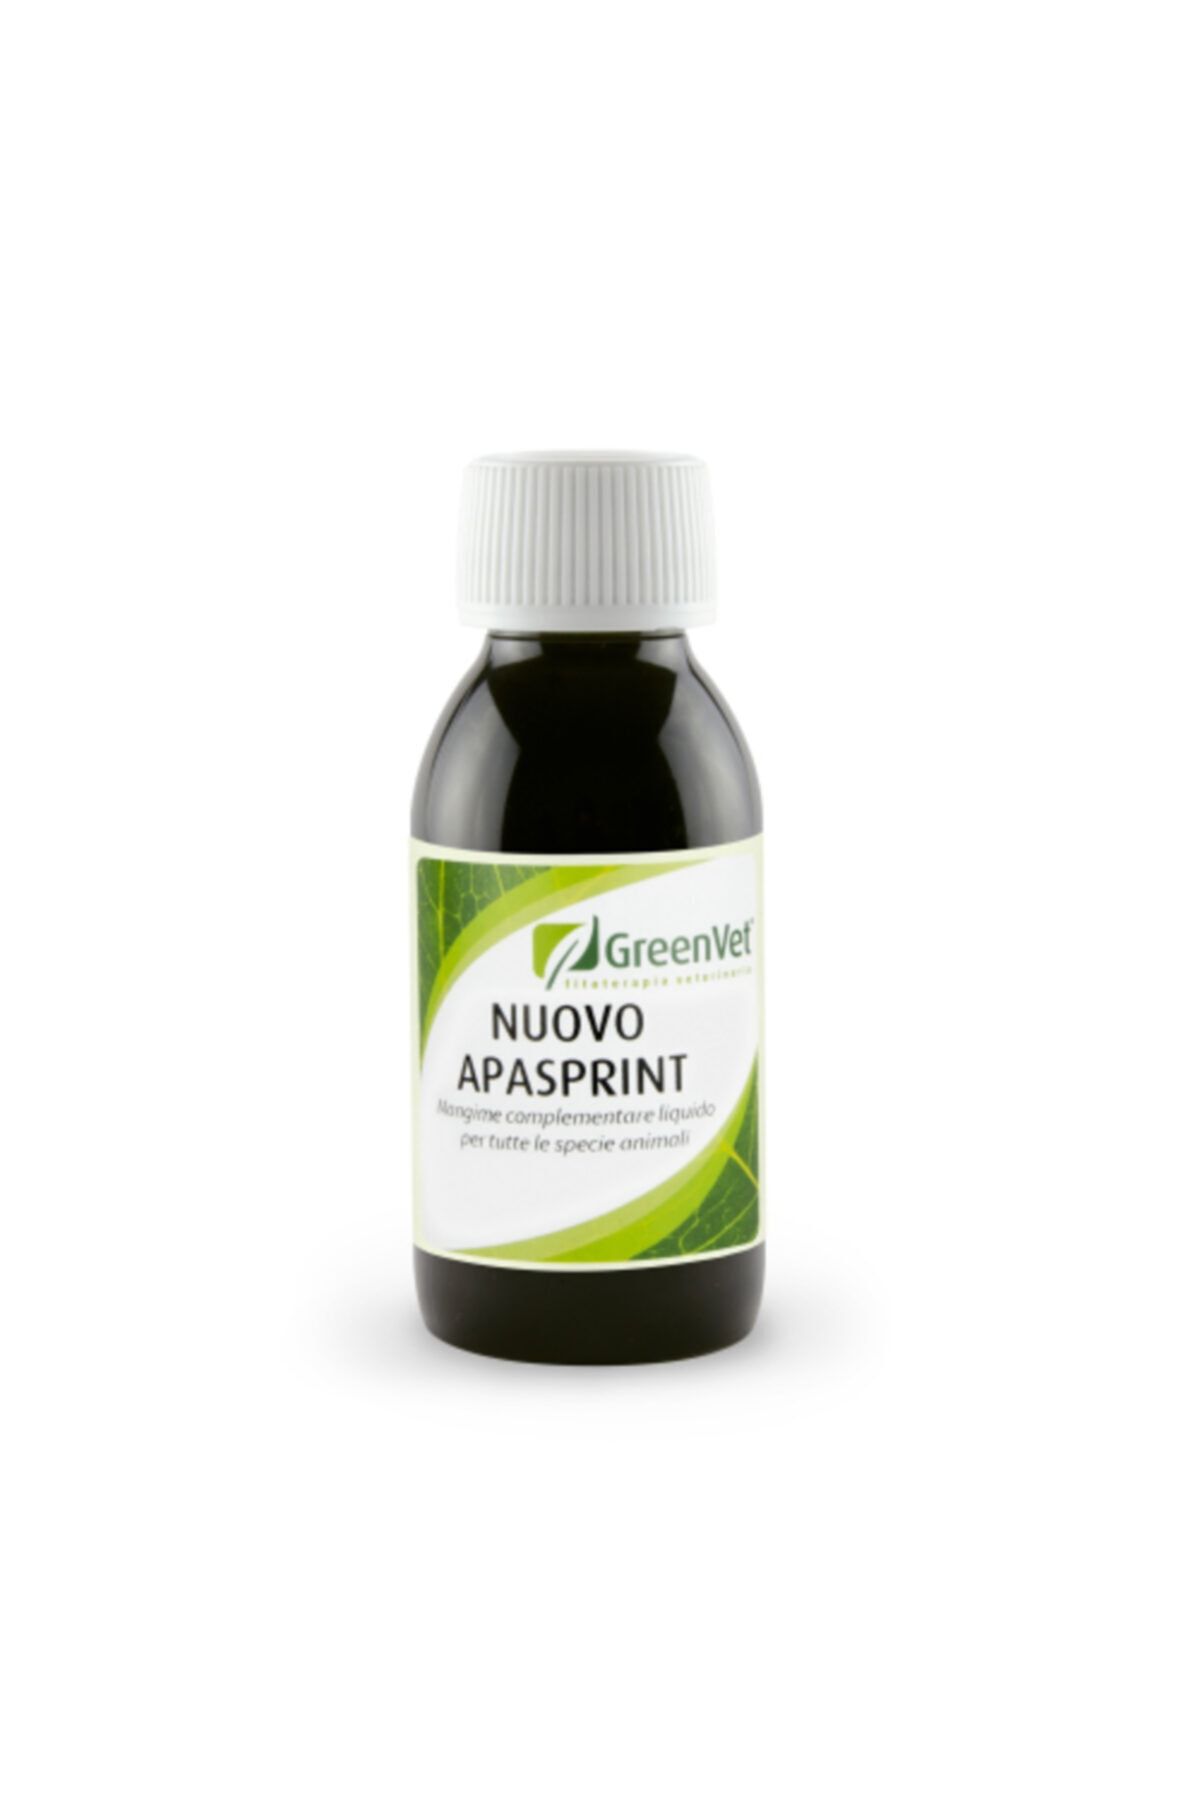 Greenvet Nuovo Apasprint 100 Ml